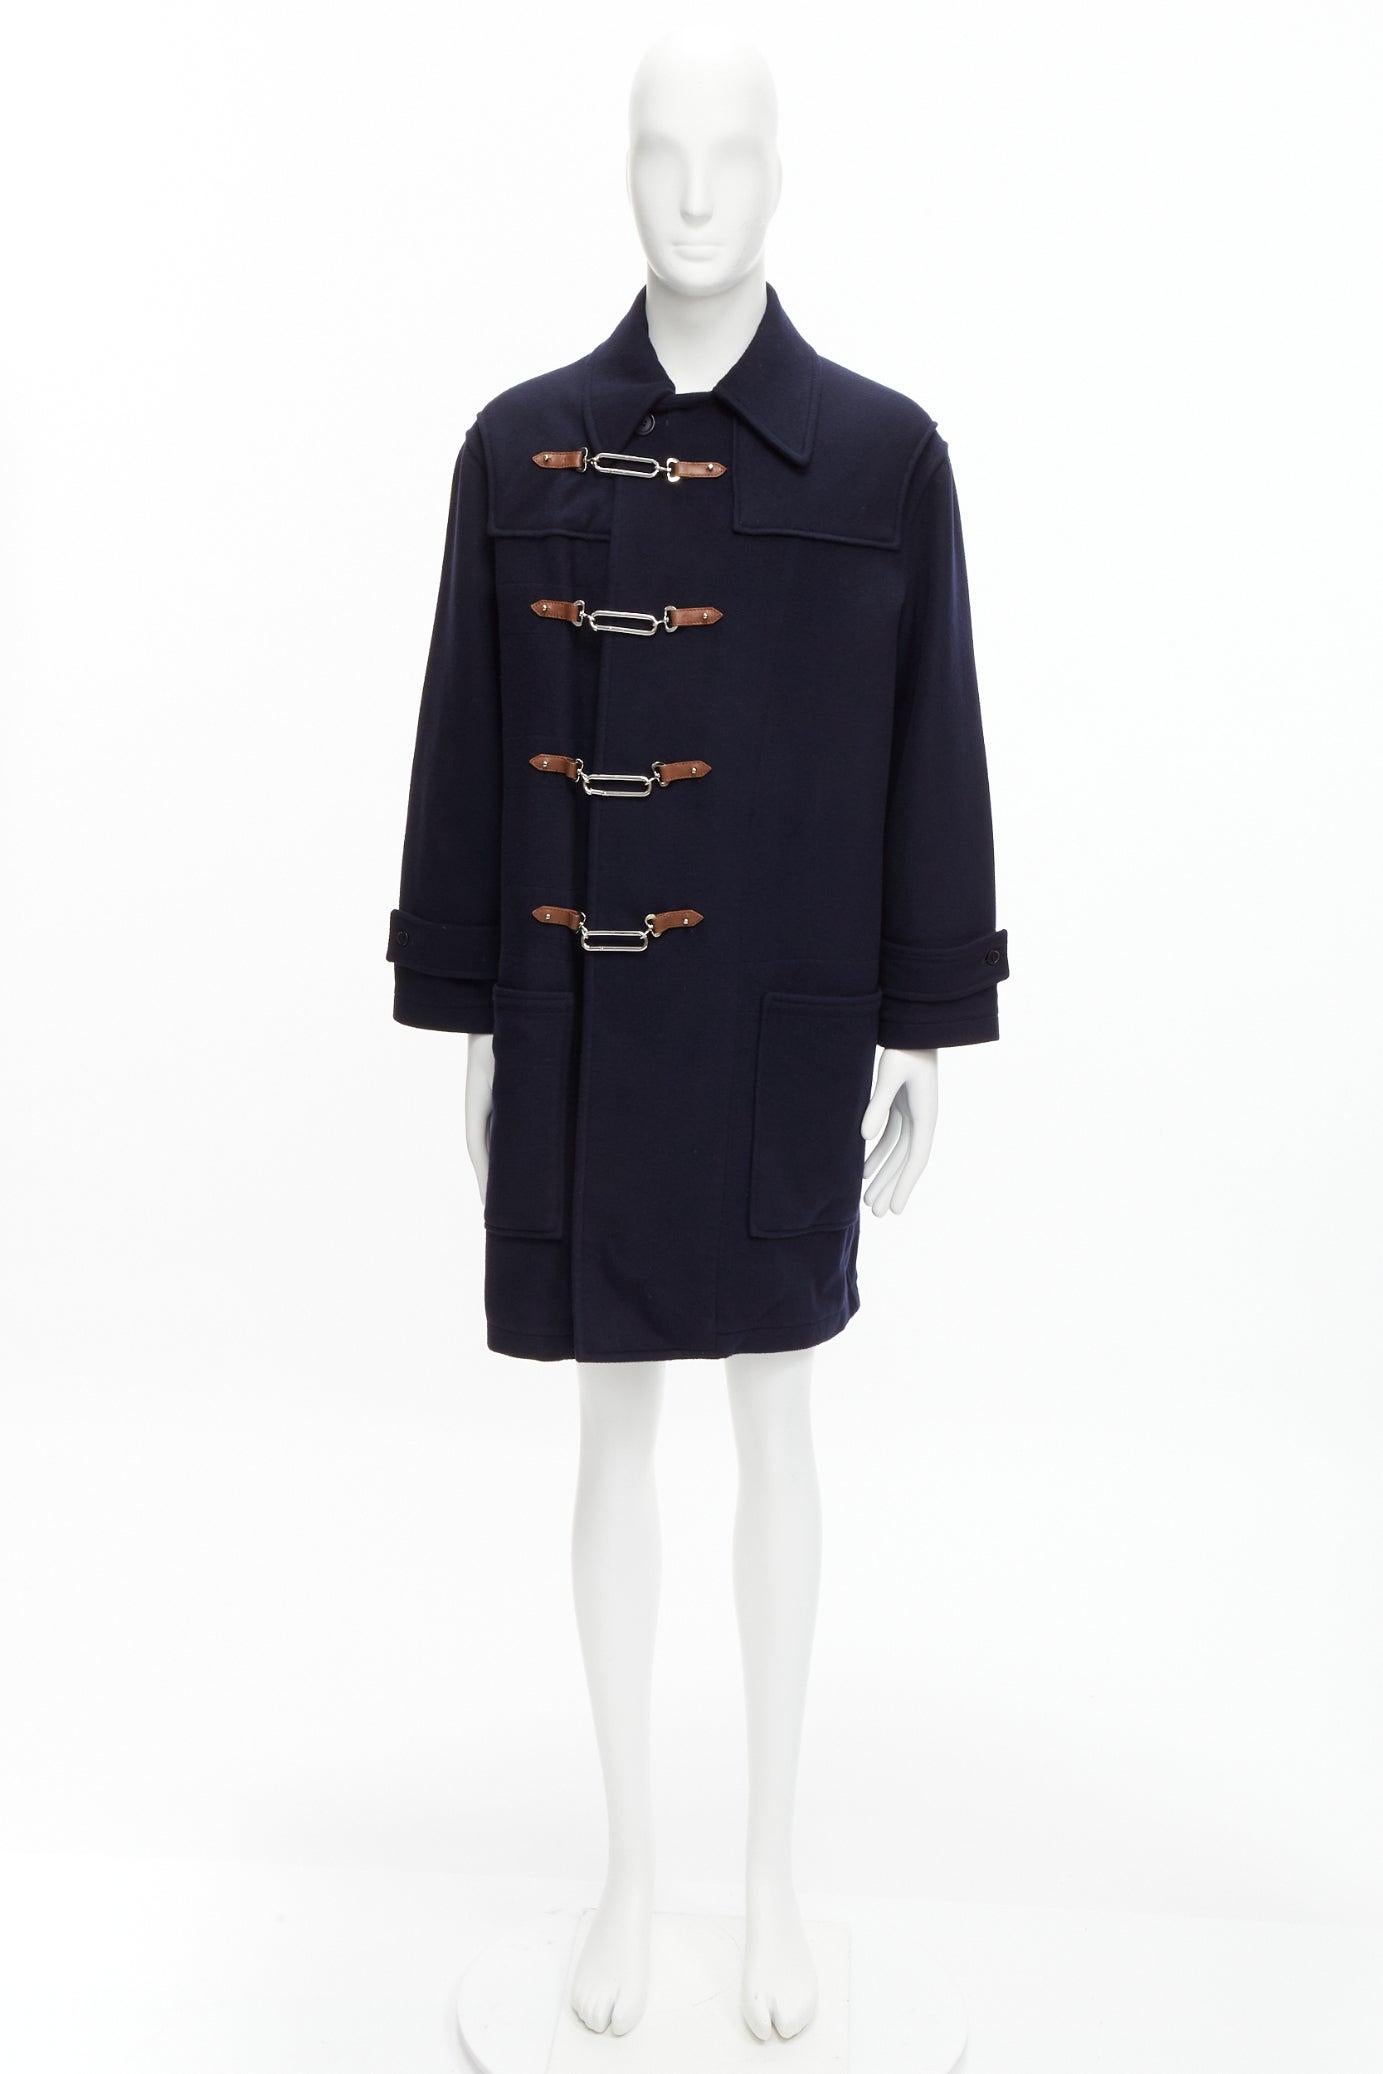 RALPH LAUREN Label Fintona 100% wool navy silver toggle buckle coat Size 6 M For Sale 6